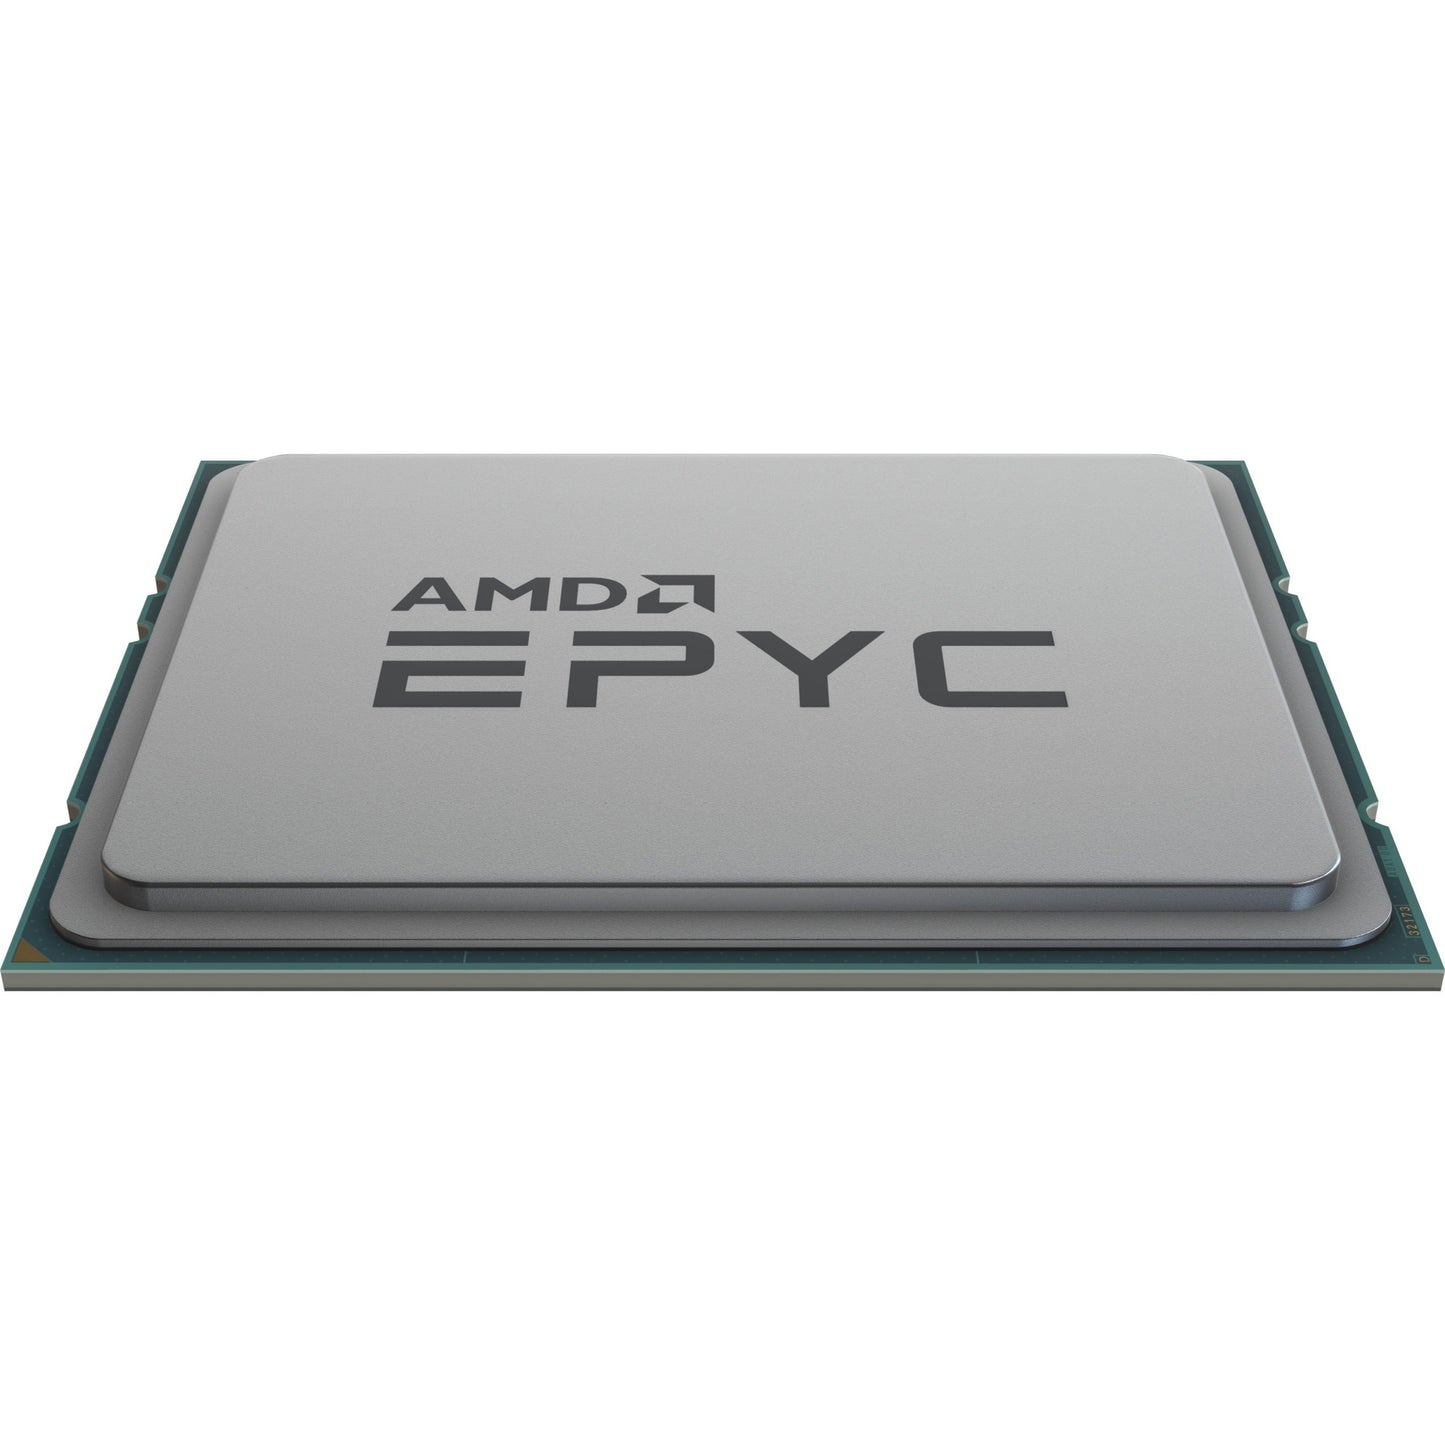 HPE AMD EPYC 7002 (2nd Gen) 7452 Dotriaconta-core (32 Core) 2.35 GHz Processor Upgrade